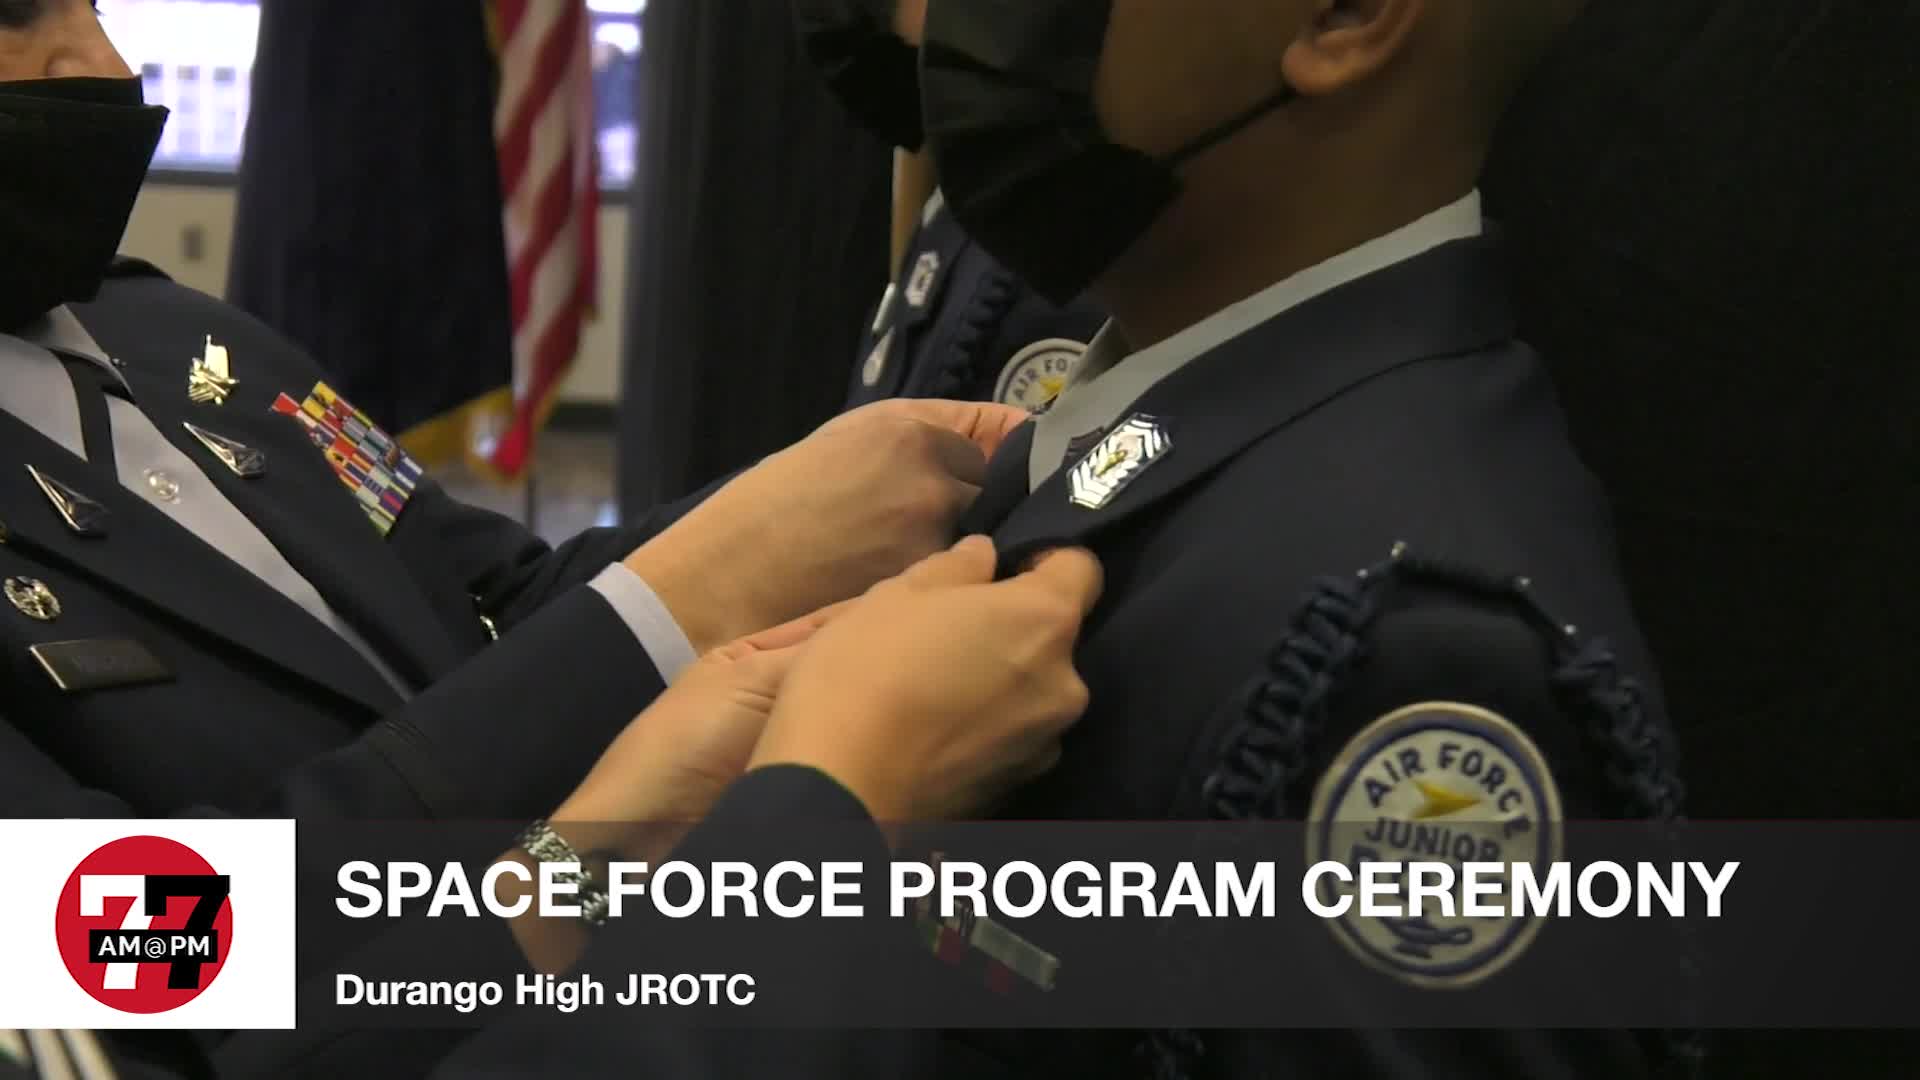 7@7PM Space Force Program Ceremony